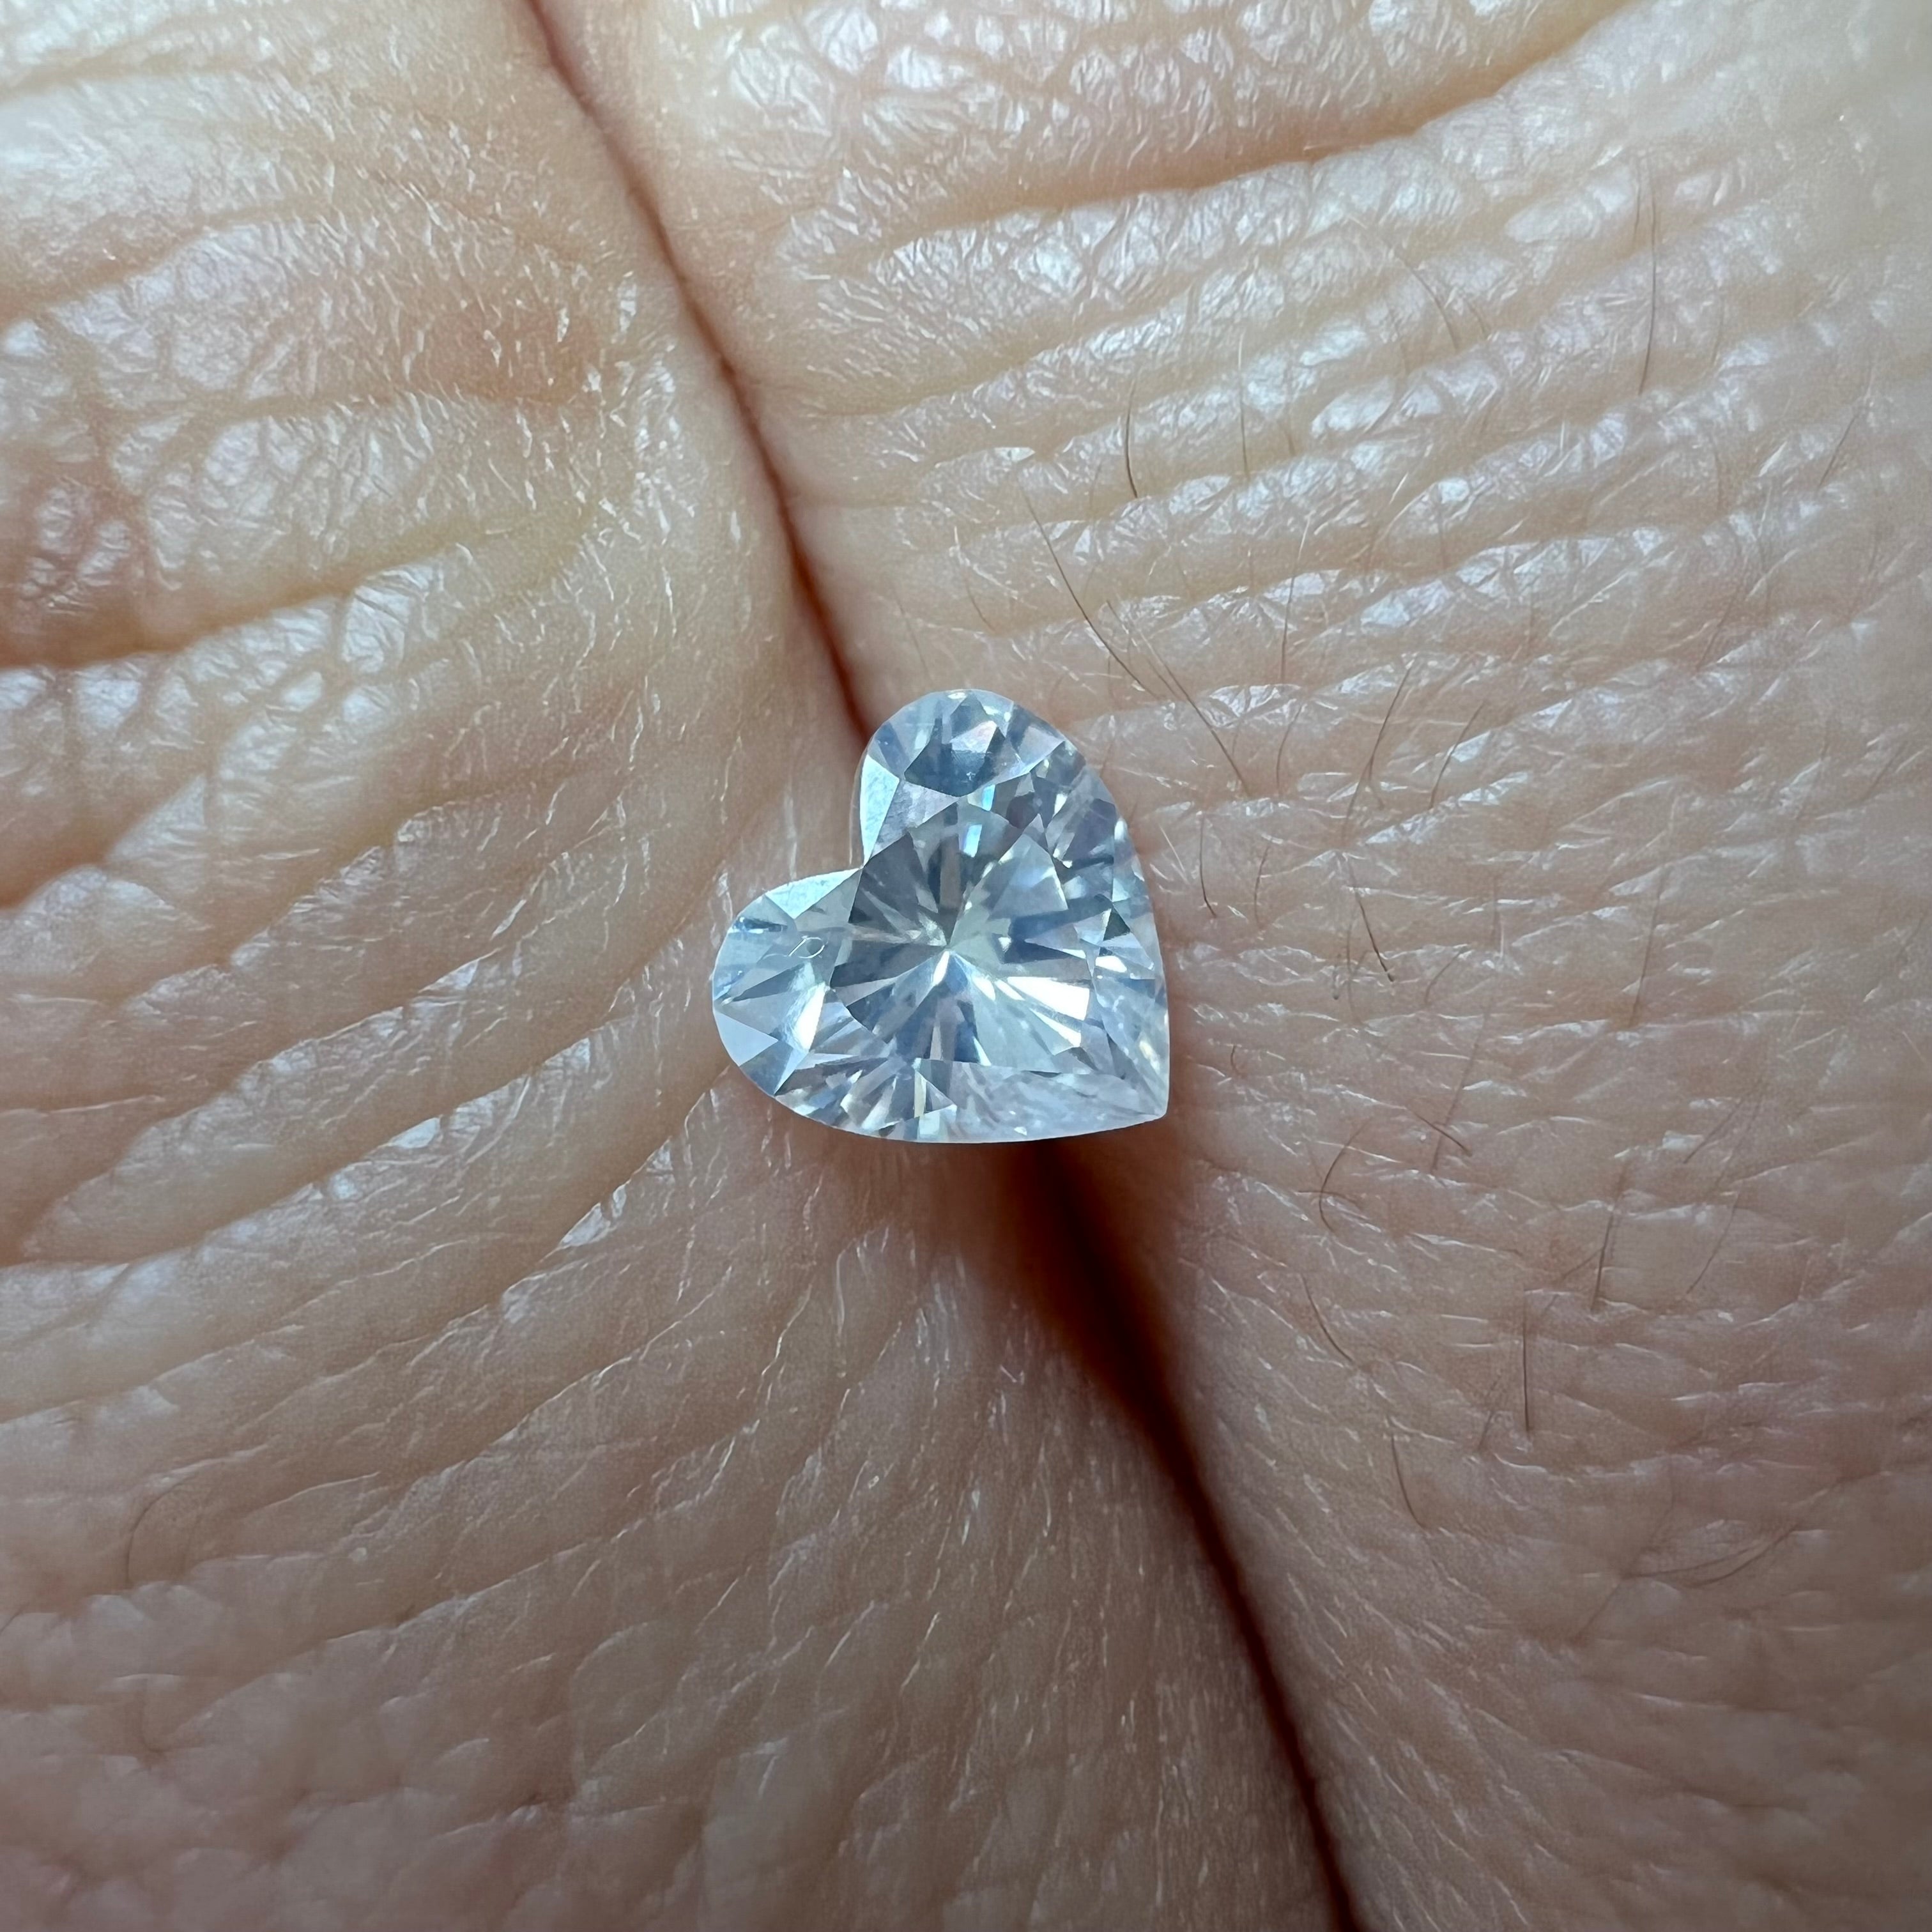 .56CT Heart Shape Diamond H VS2 5.44x5.51x3.21mm Natural Earth mined